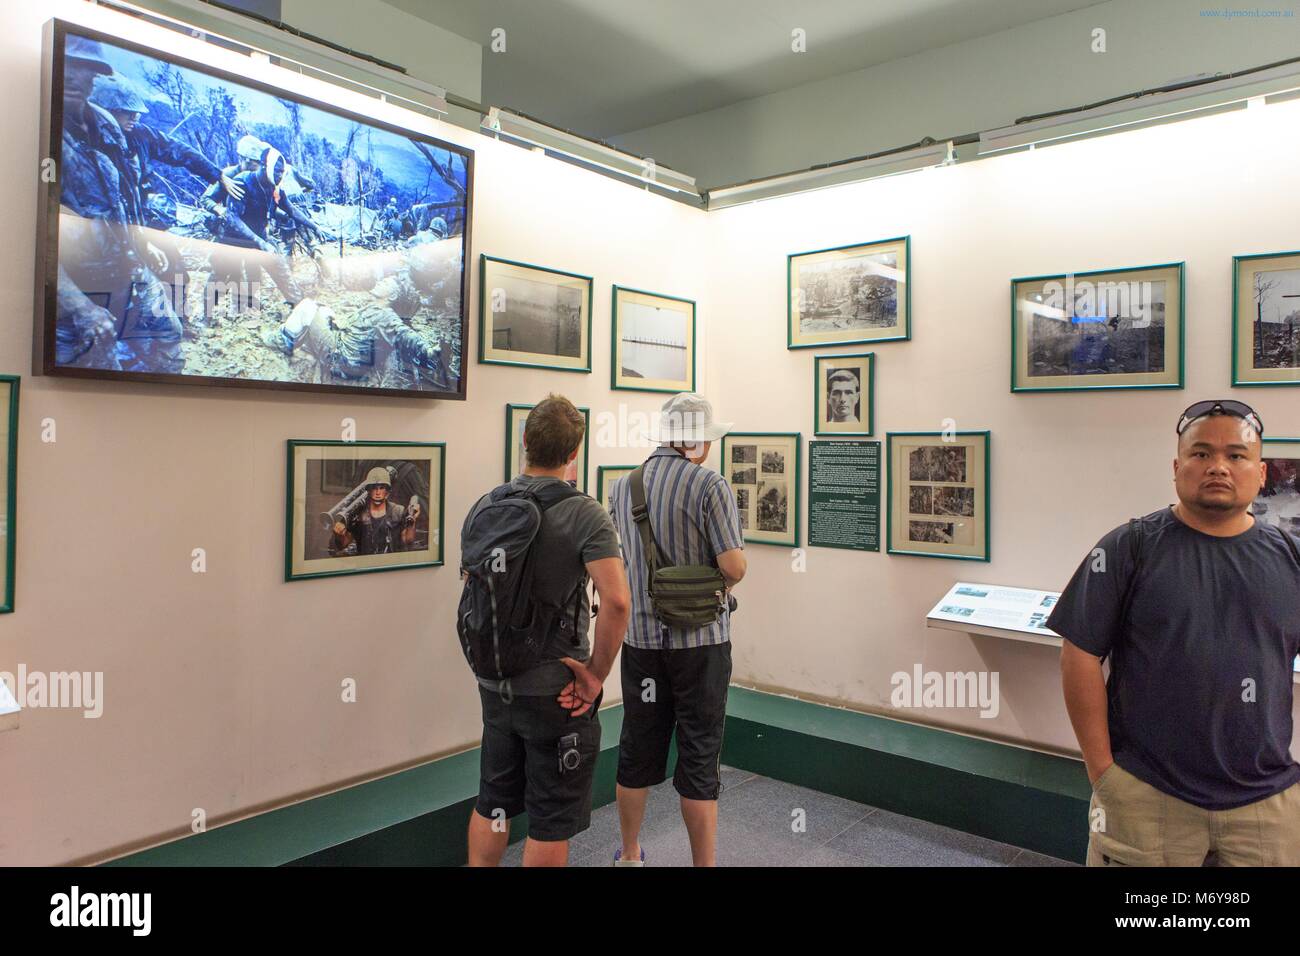 Das Requiem Foto Ausstellung im Museum der Kriegszeugnisse, Ho Chi Minh City, Vietnam Stockfoto